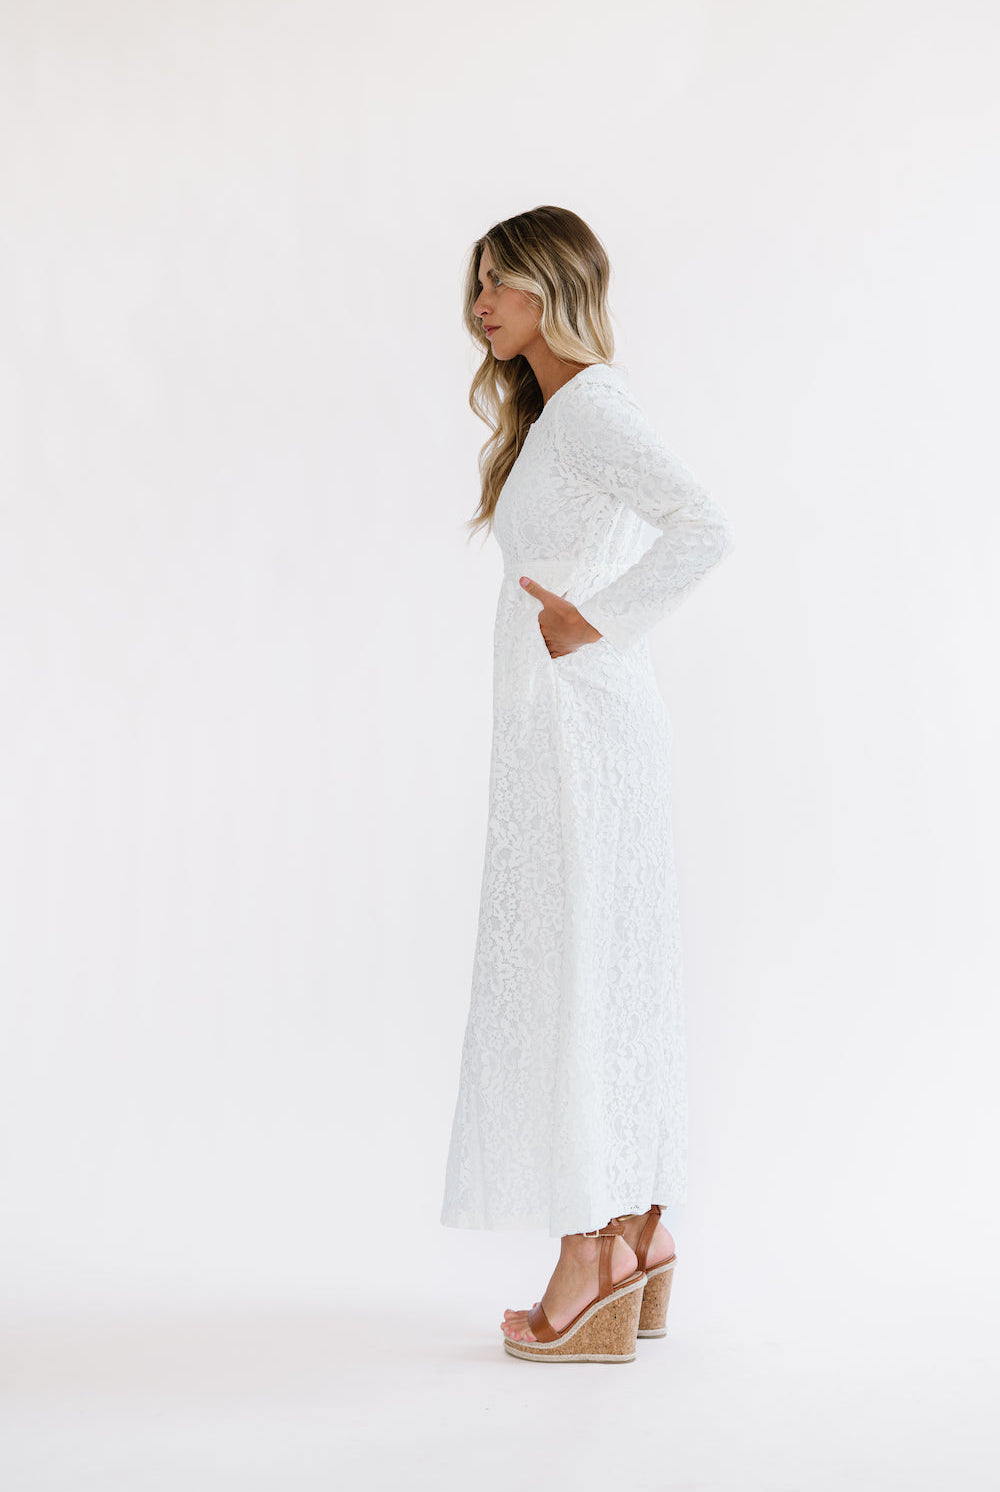 White maxi dress dress with pockets